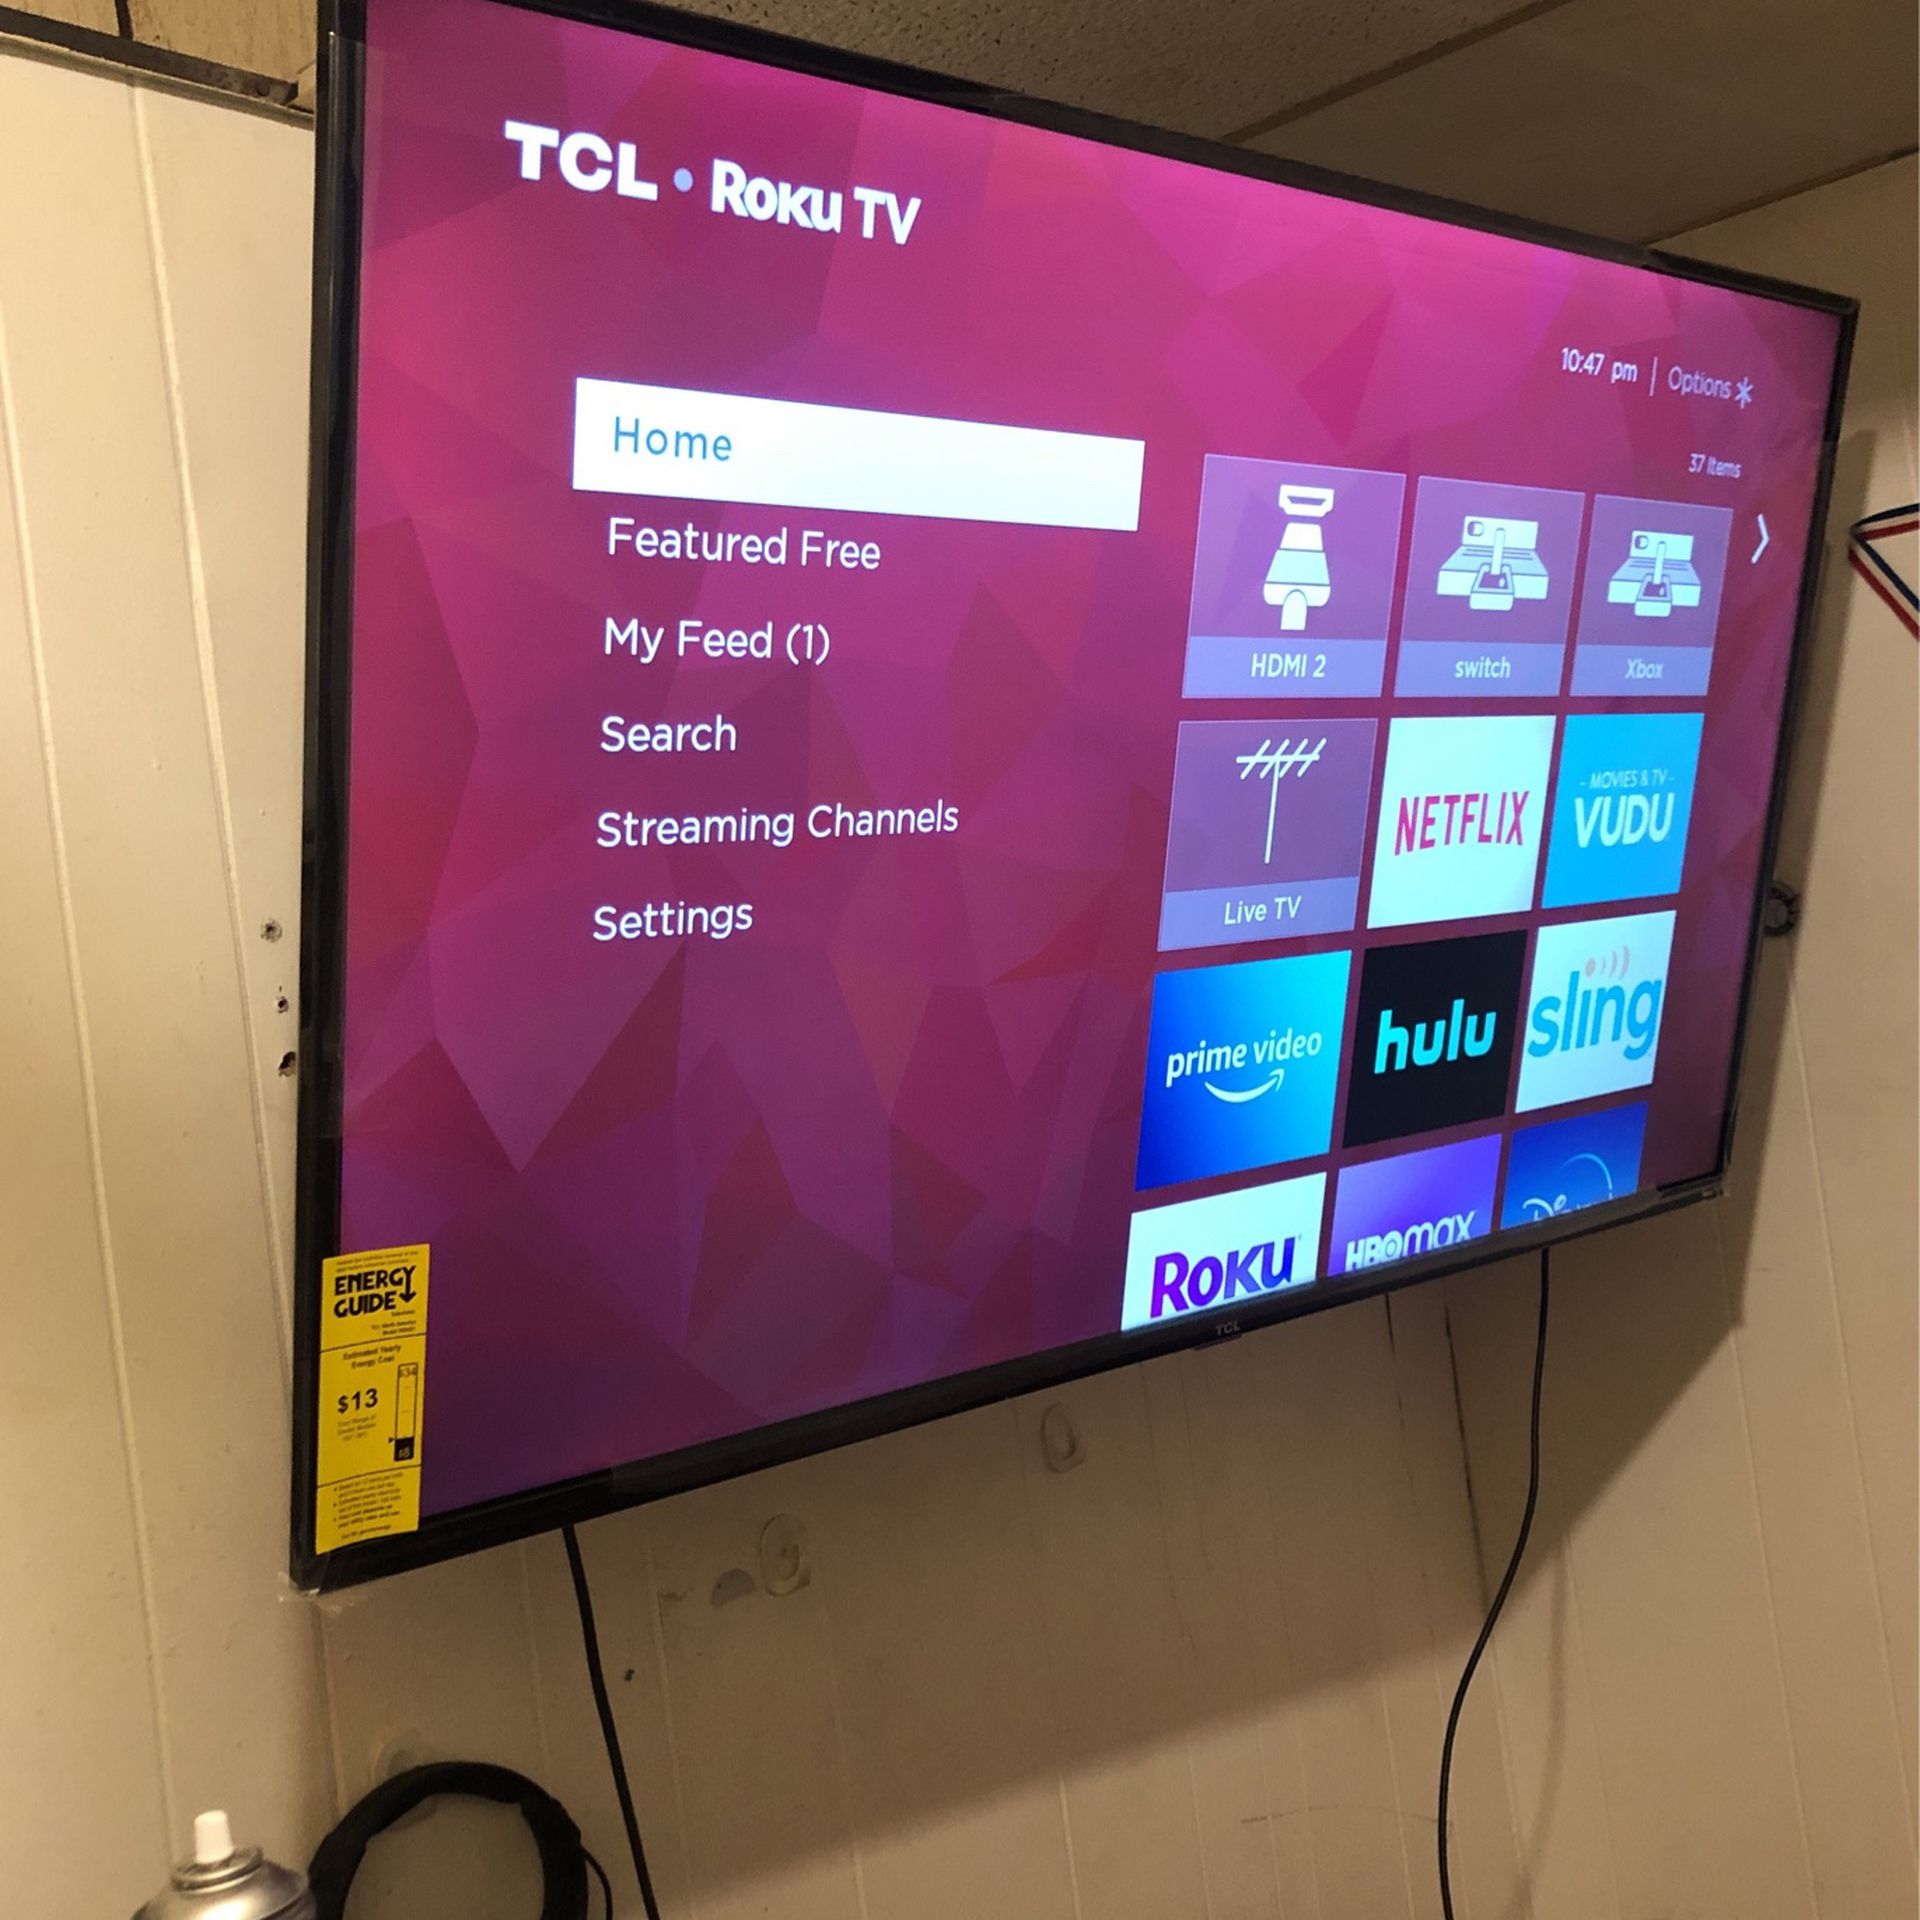 TCL 55” Smart Tv Roku Clean(No Crack) (like New)